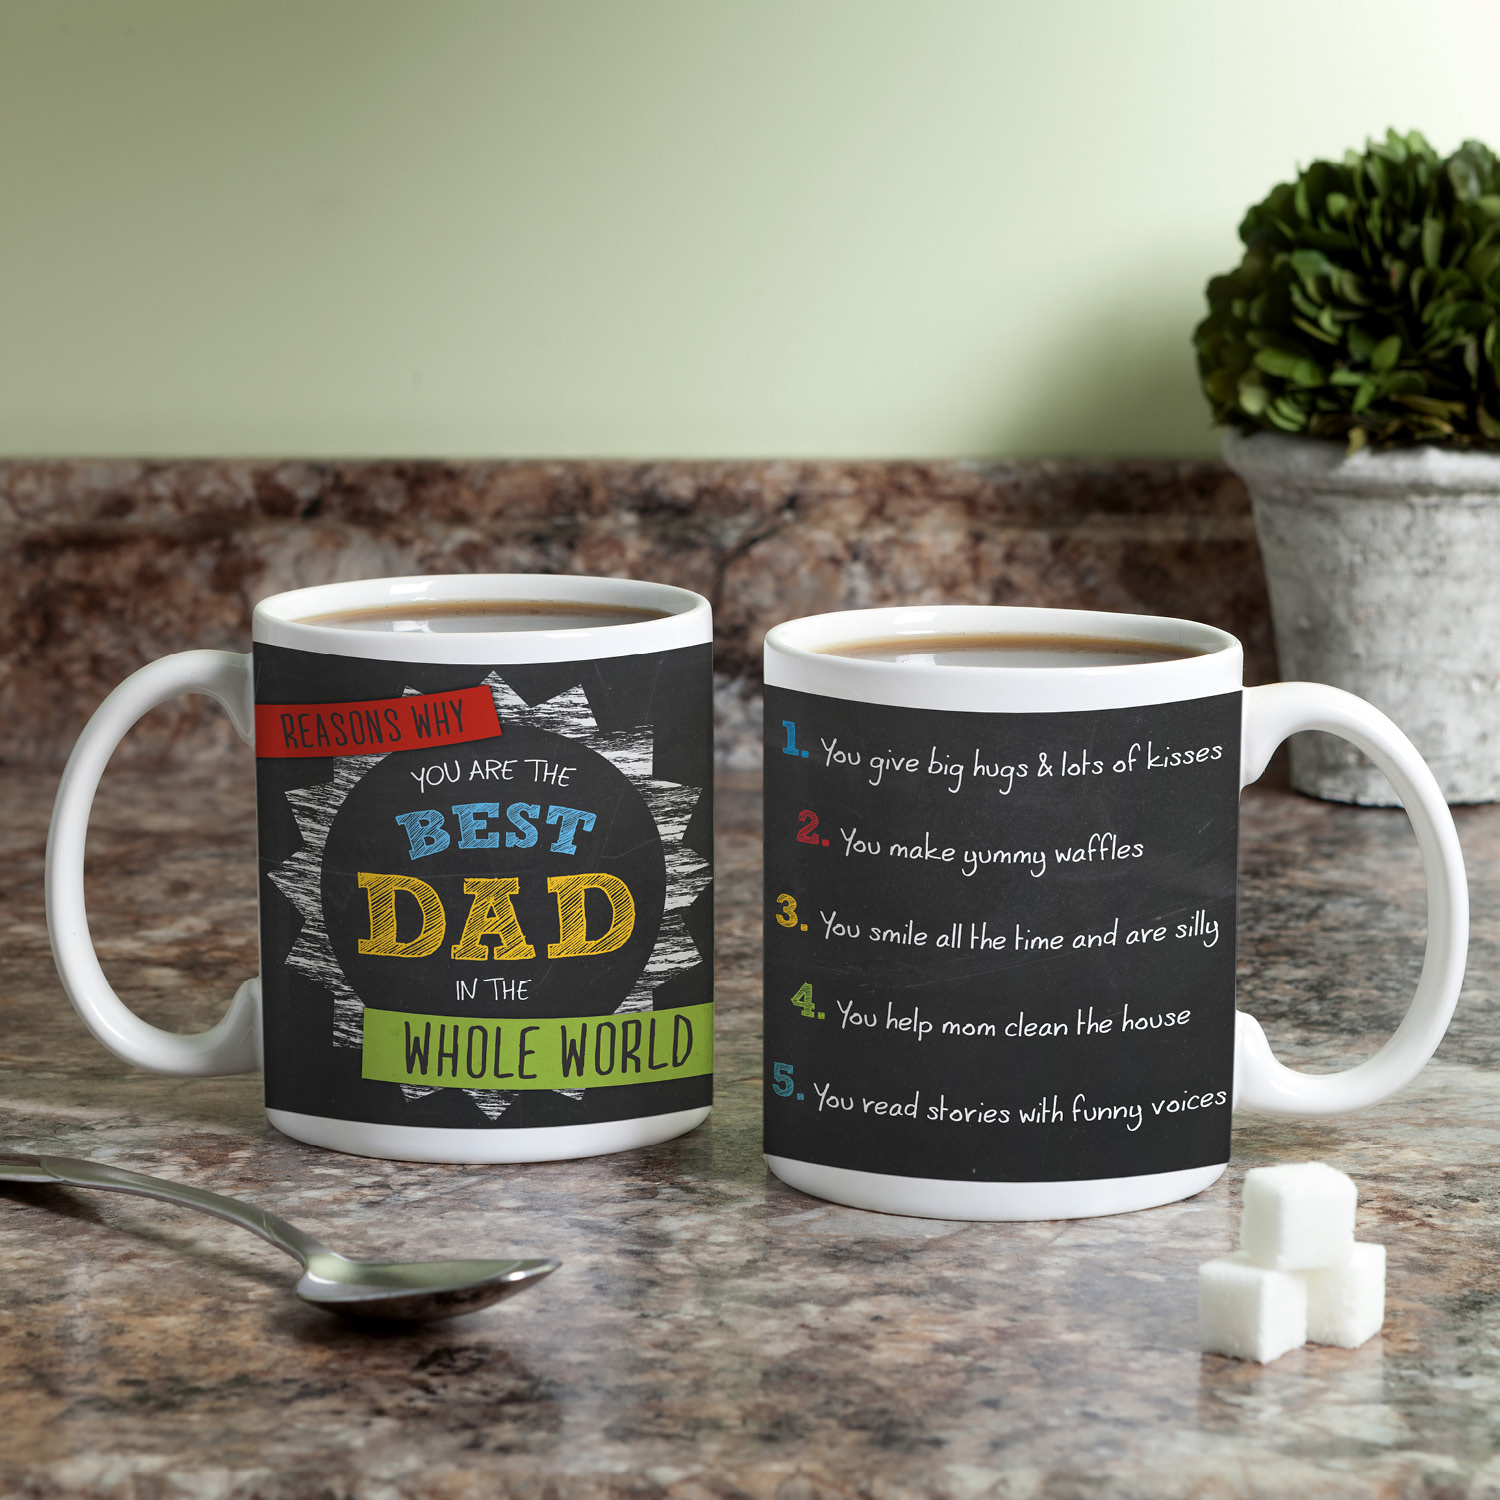 Reasons Why For Dad Personalized White Coffee Mug - 11 oz.